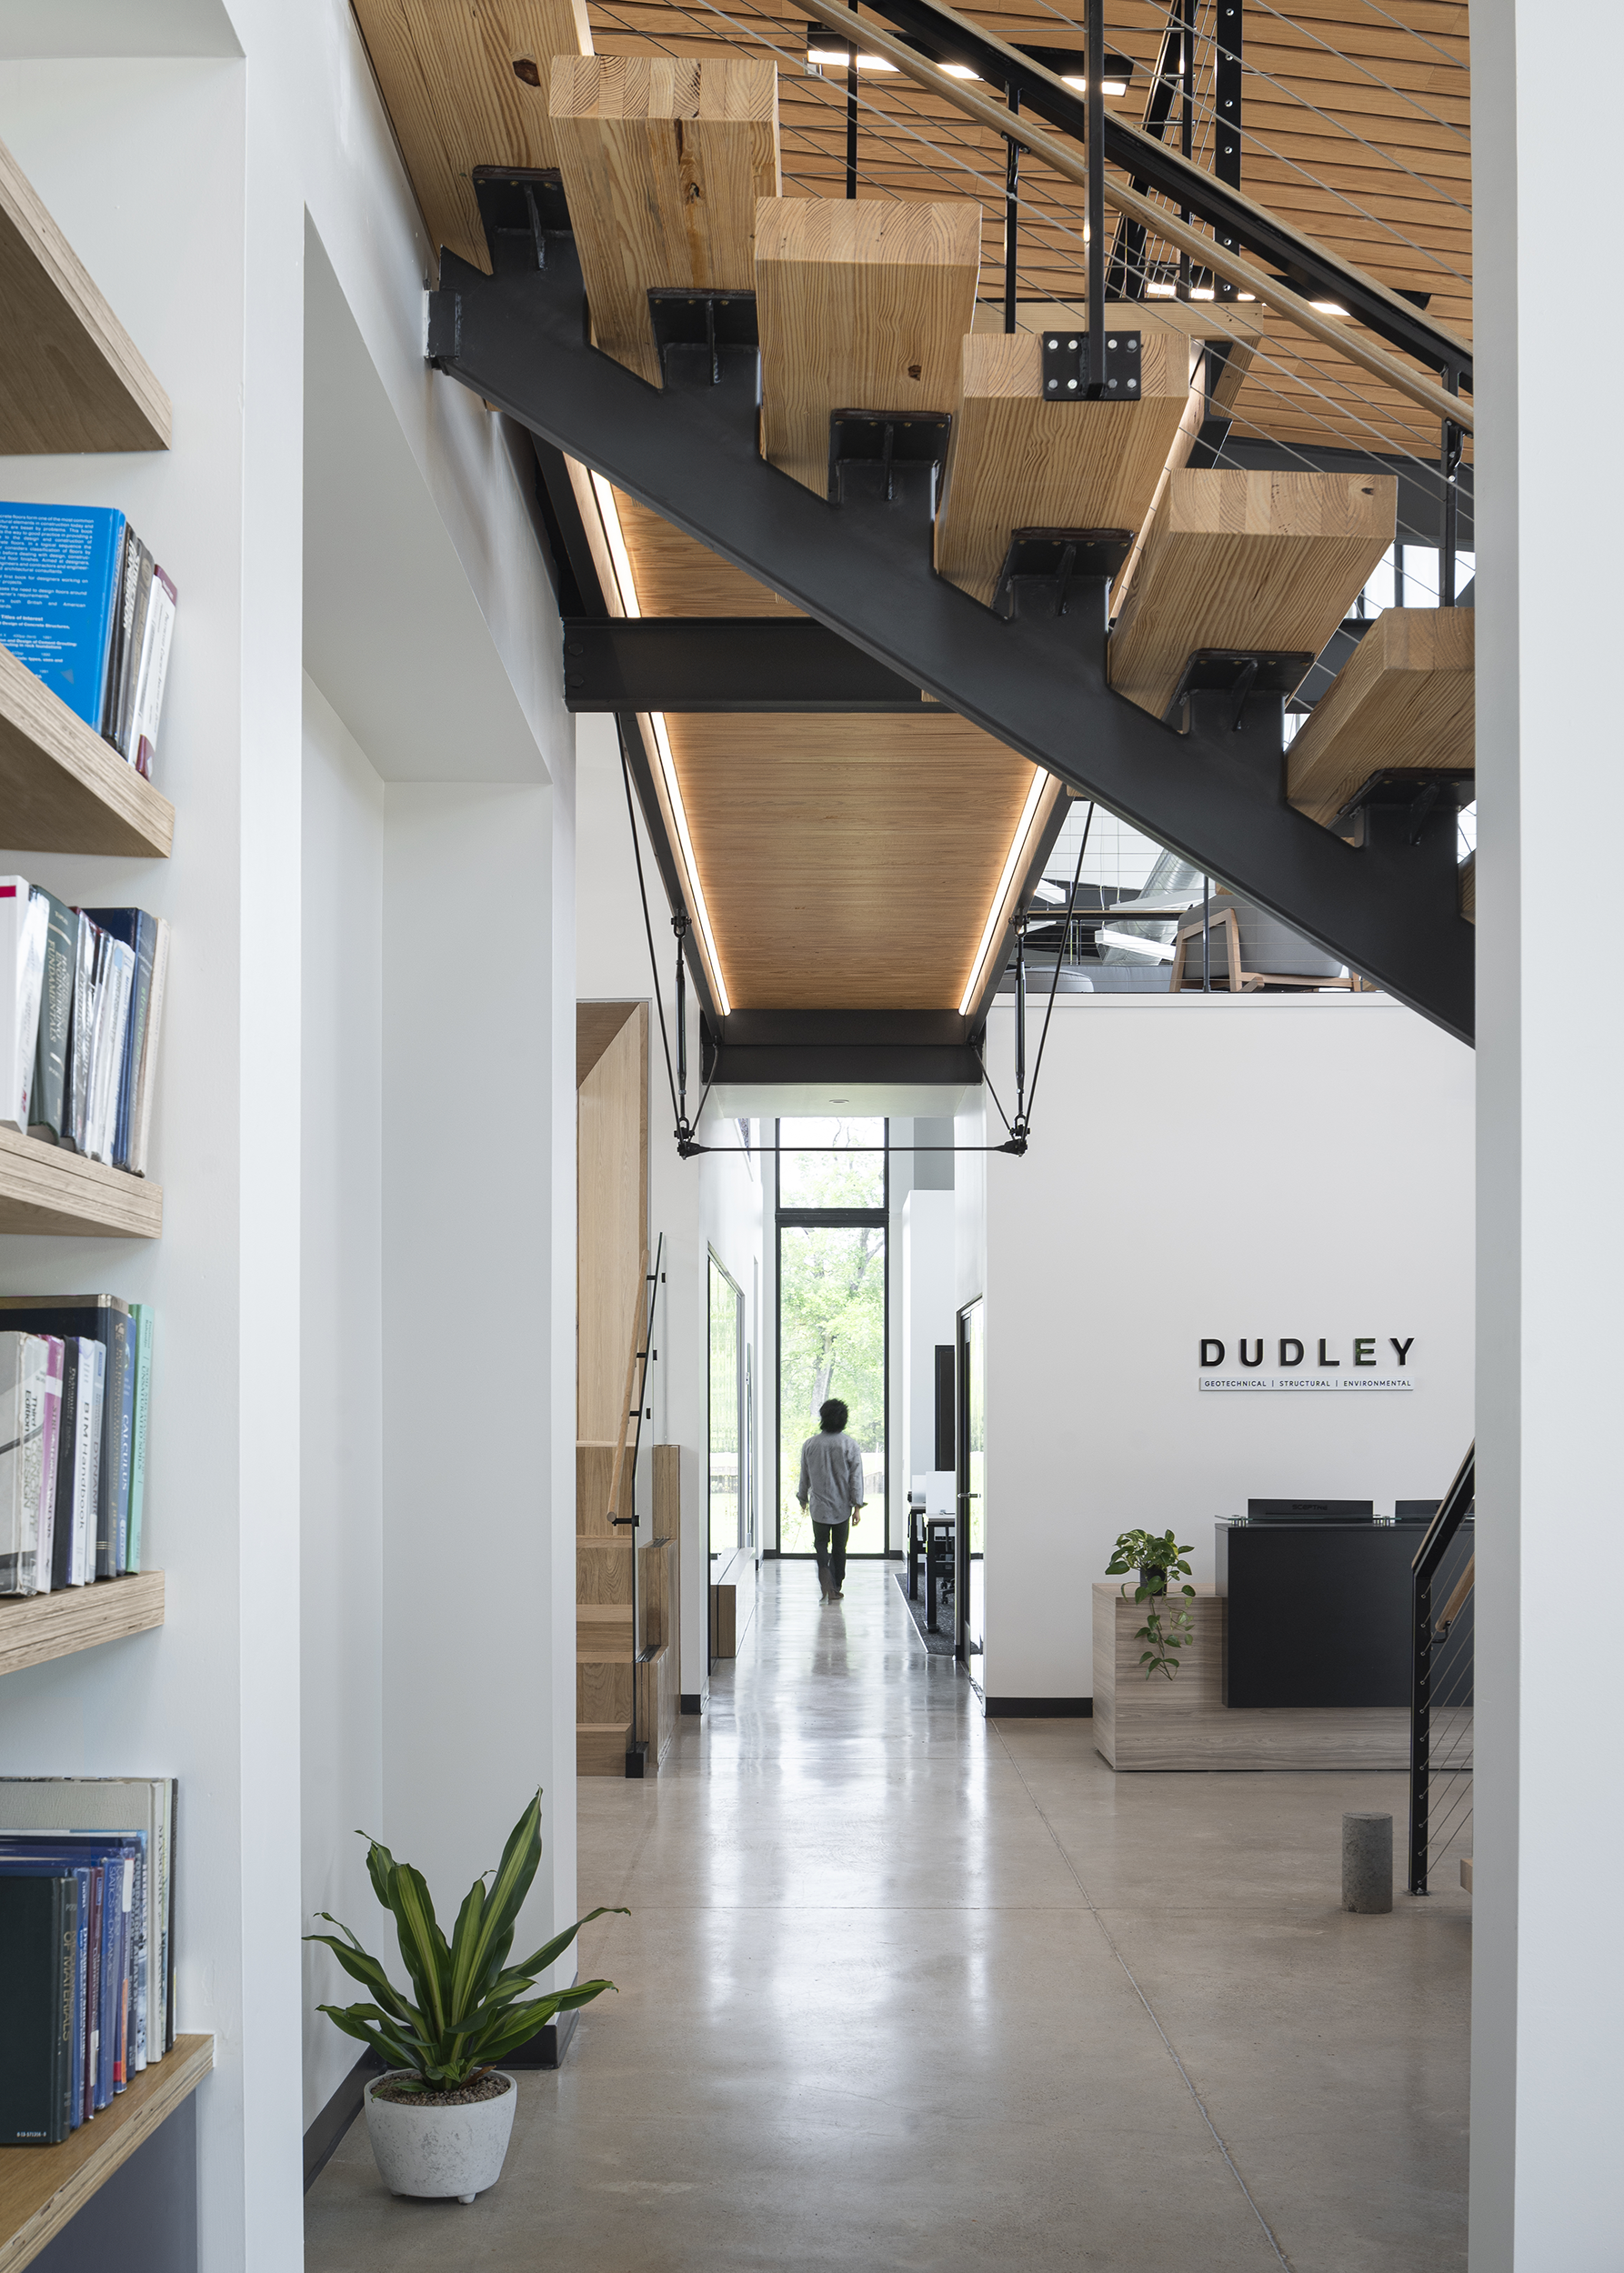 Dudley Office - interior shot